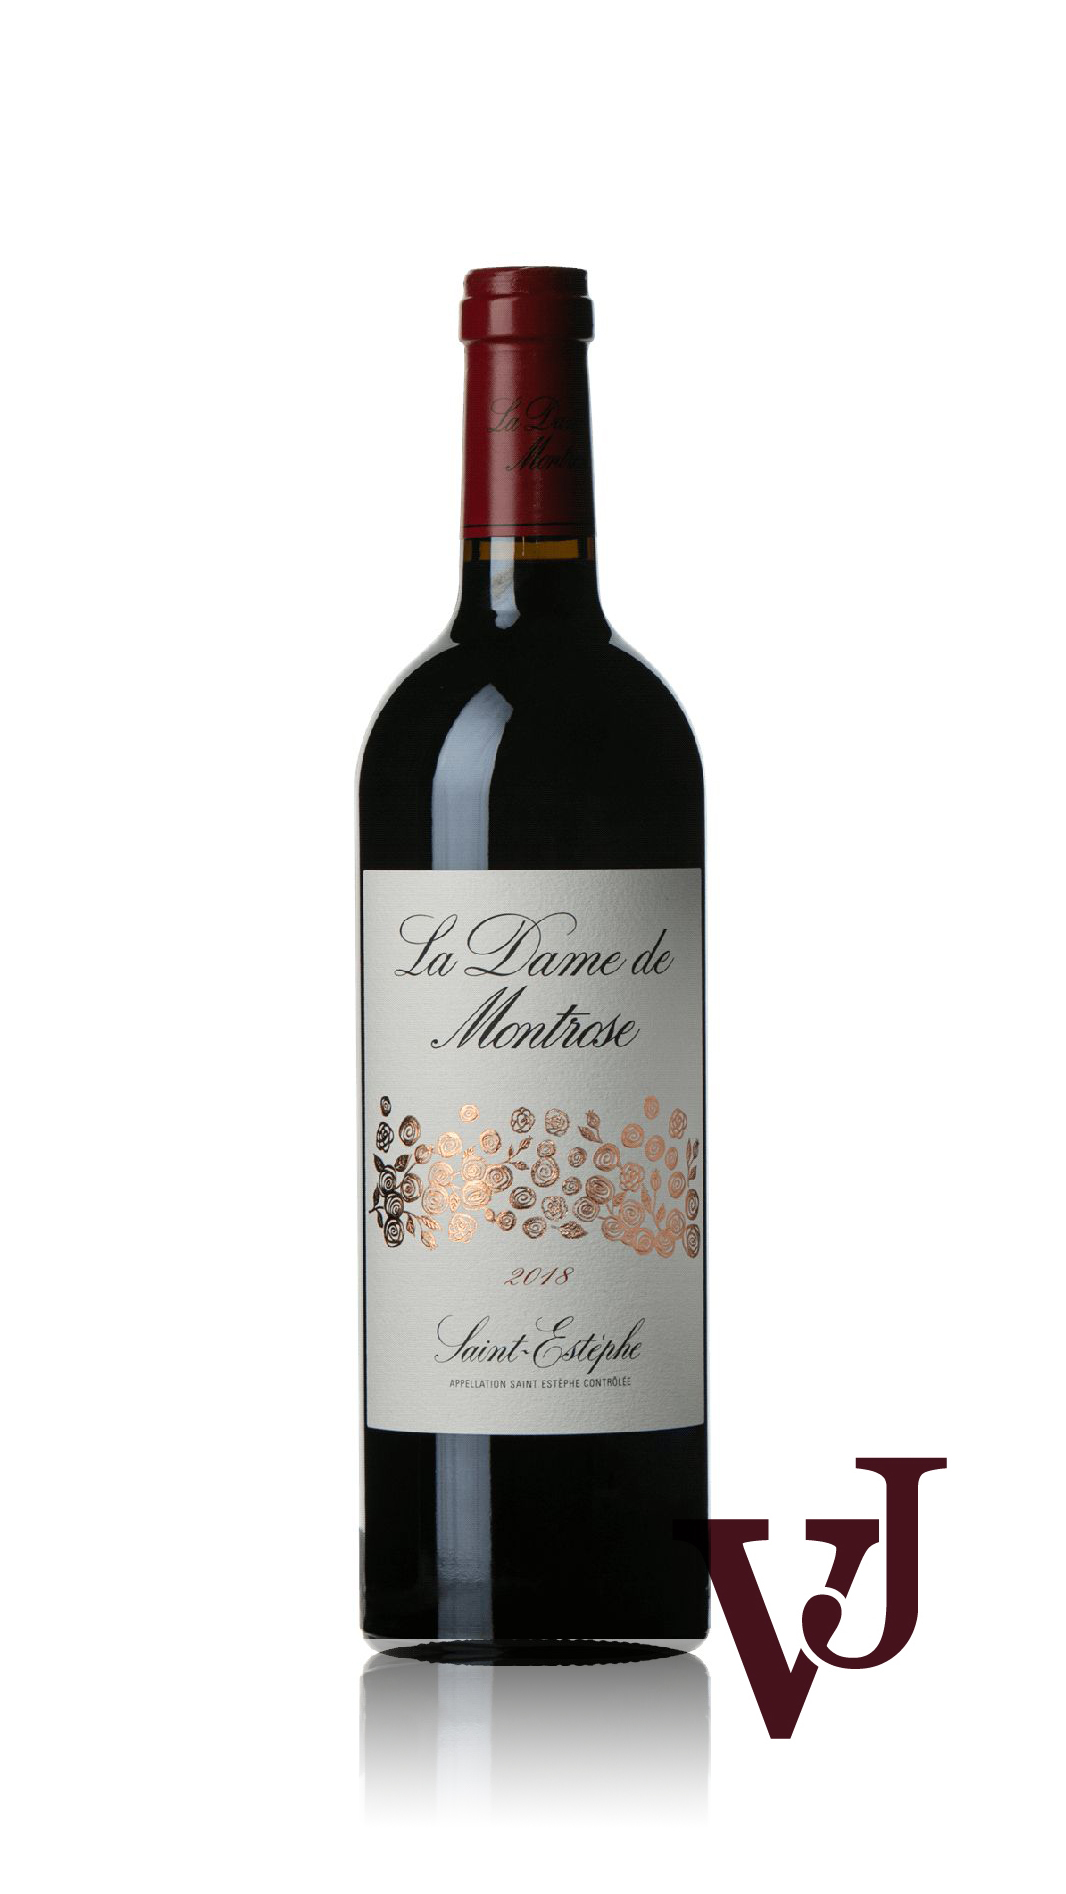 Rött Vin - La Dame de Montrose Château Montrose 2018 artikel nummer 9504901 från producenten Château Montrose från området Frankrike